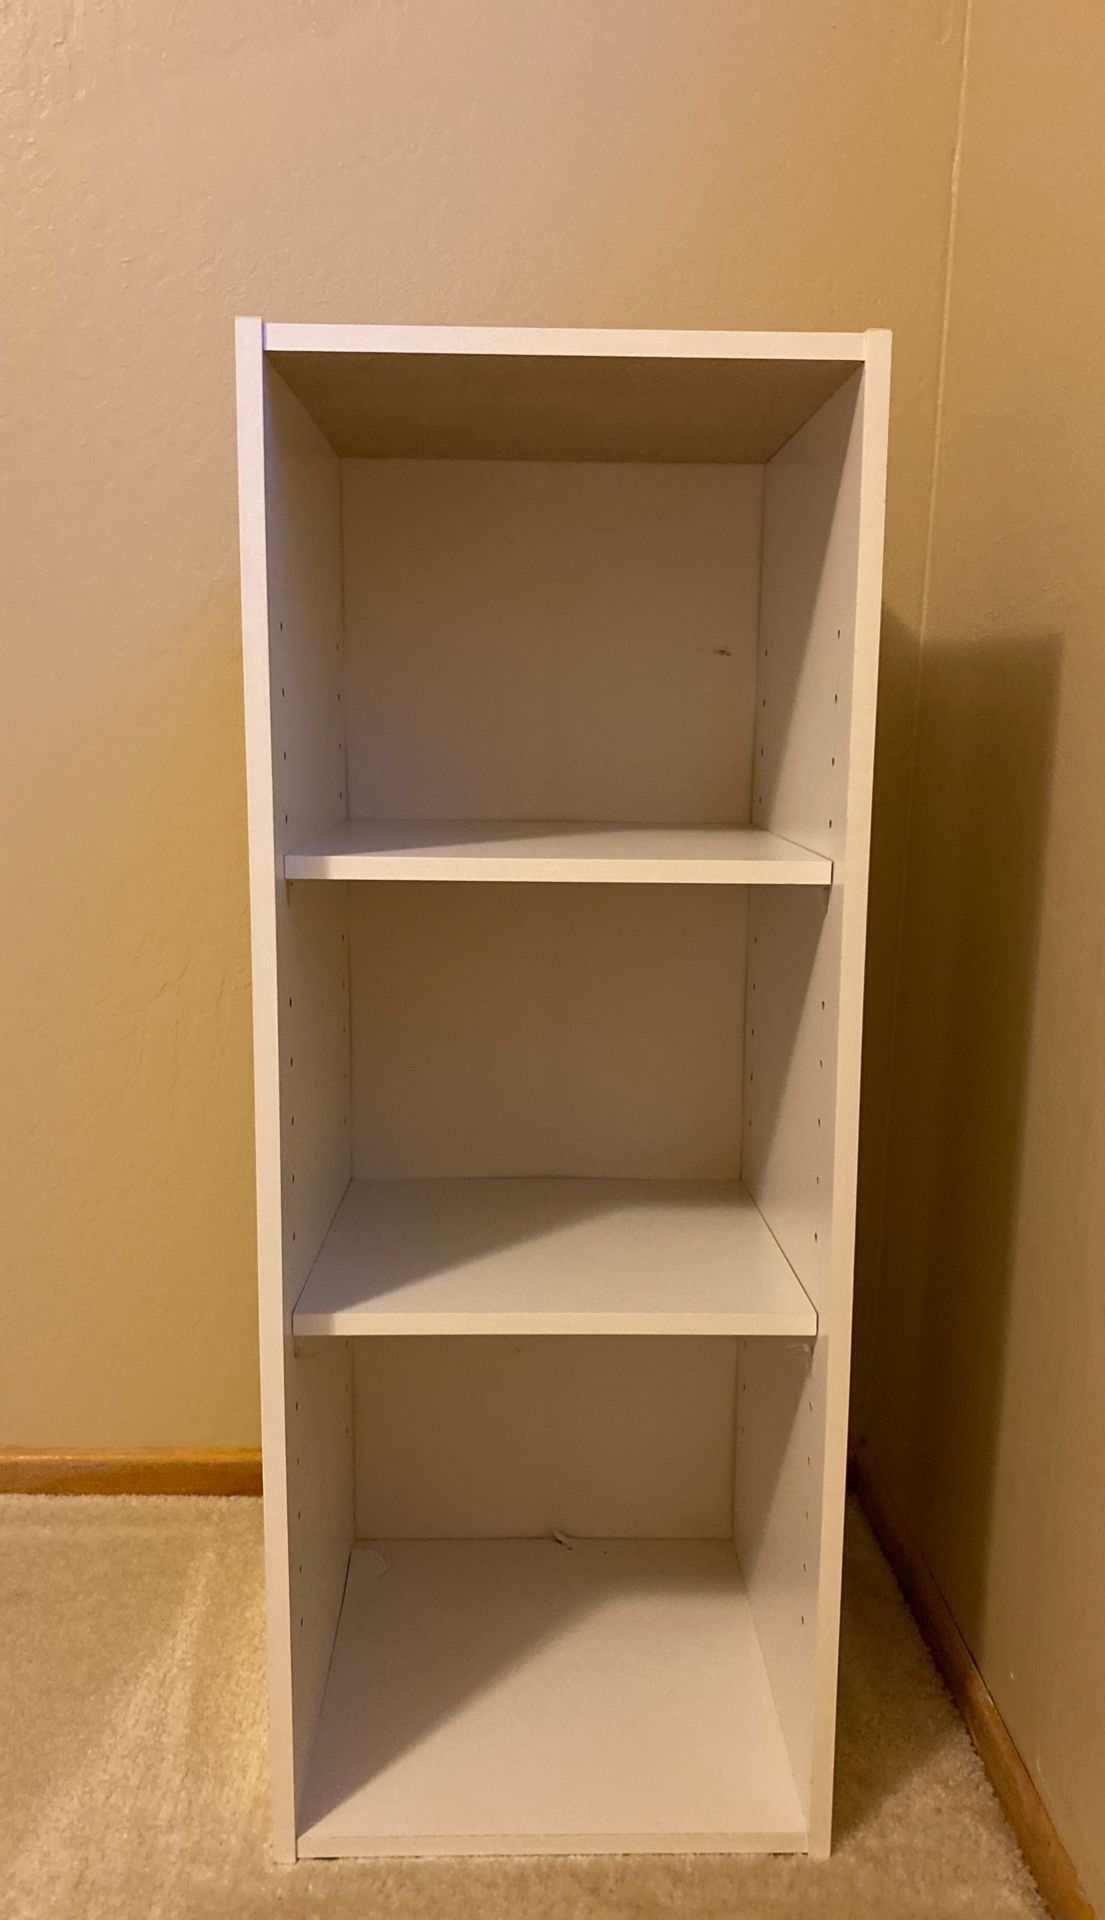 Small shelf